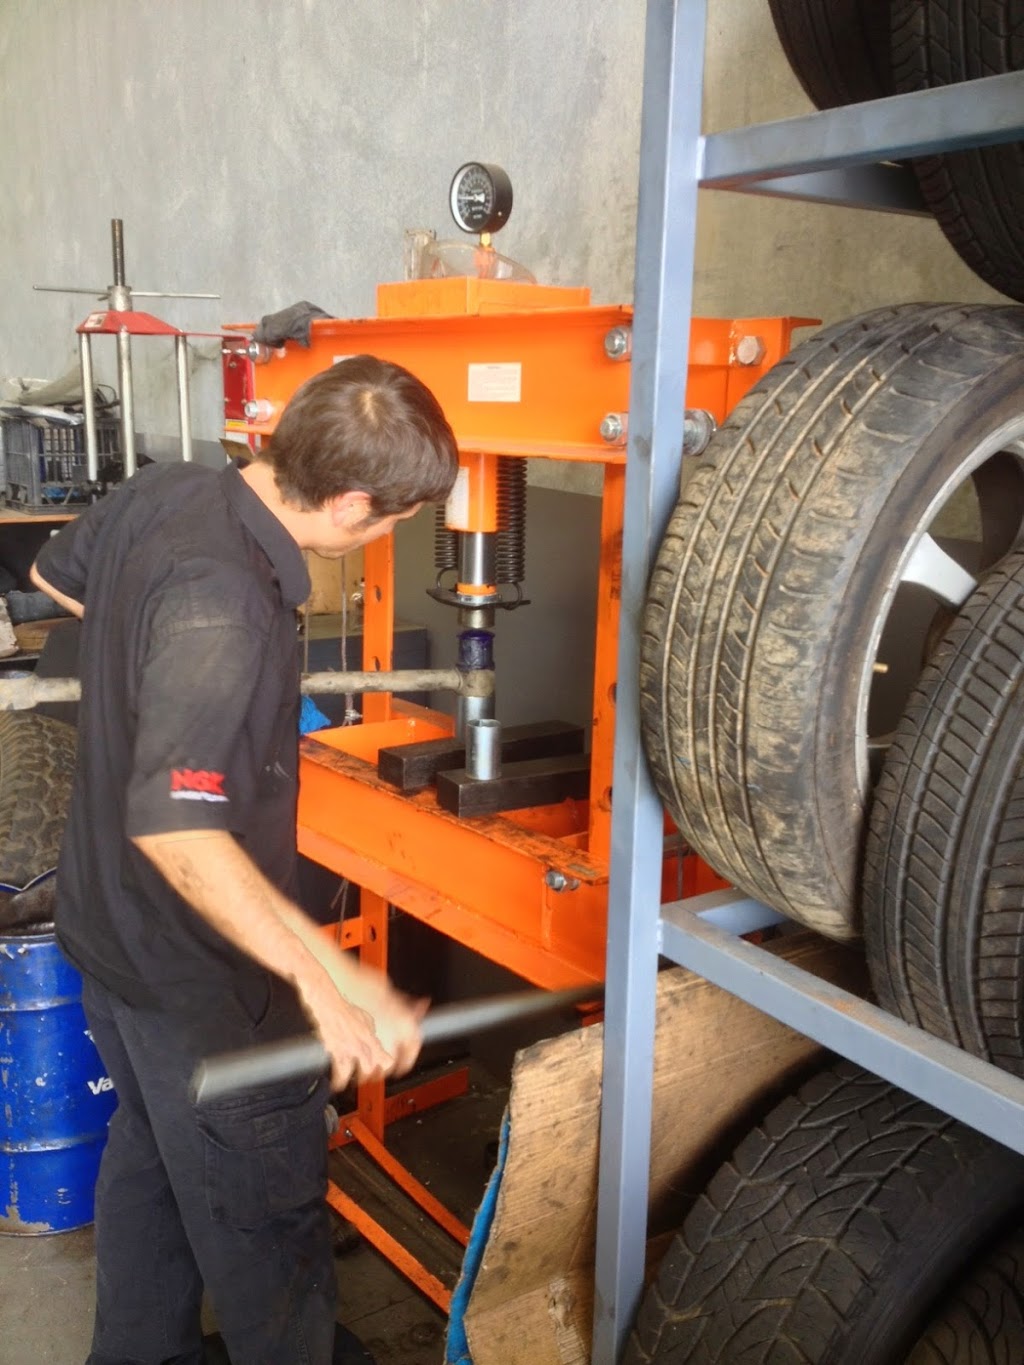 AA Automech PTY Ltd. | car repair | 4/10 Brewers St, Burpengary QLD 4505, Australia | 0738888552 OR +61 7 3888 8552